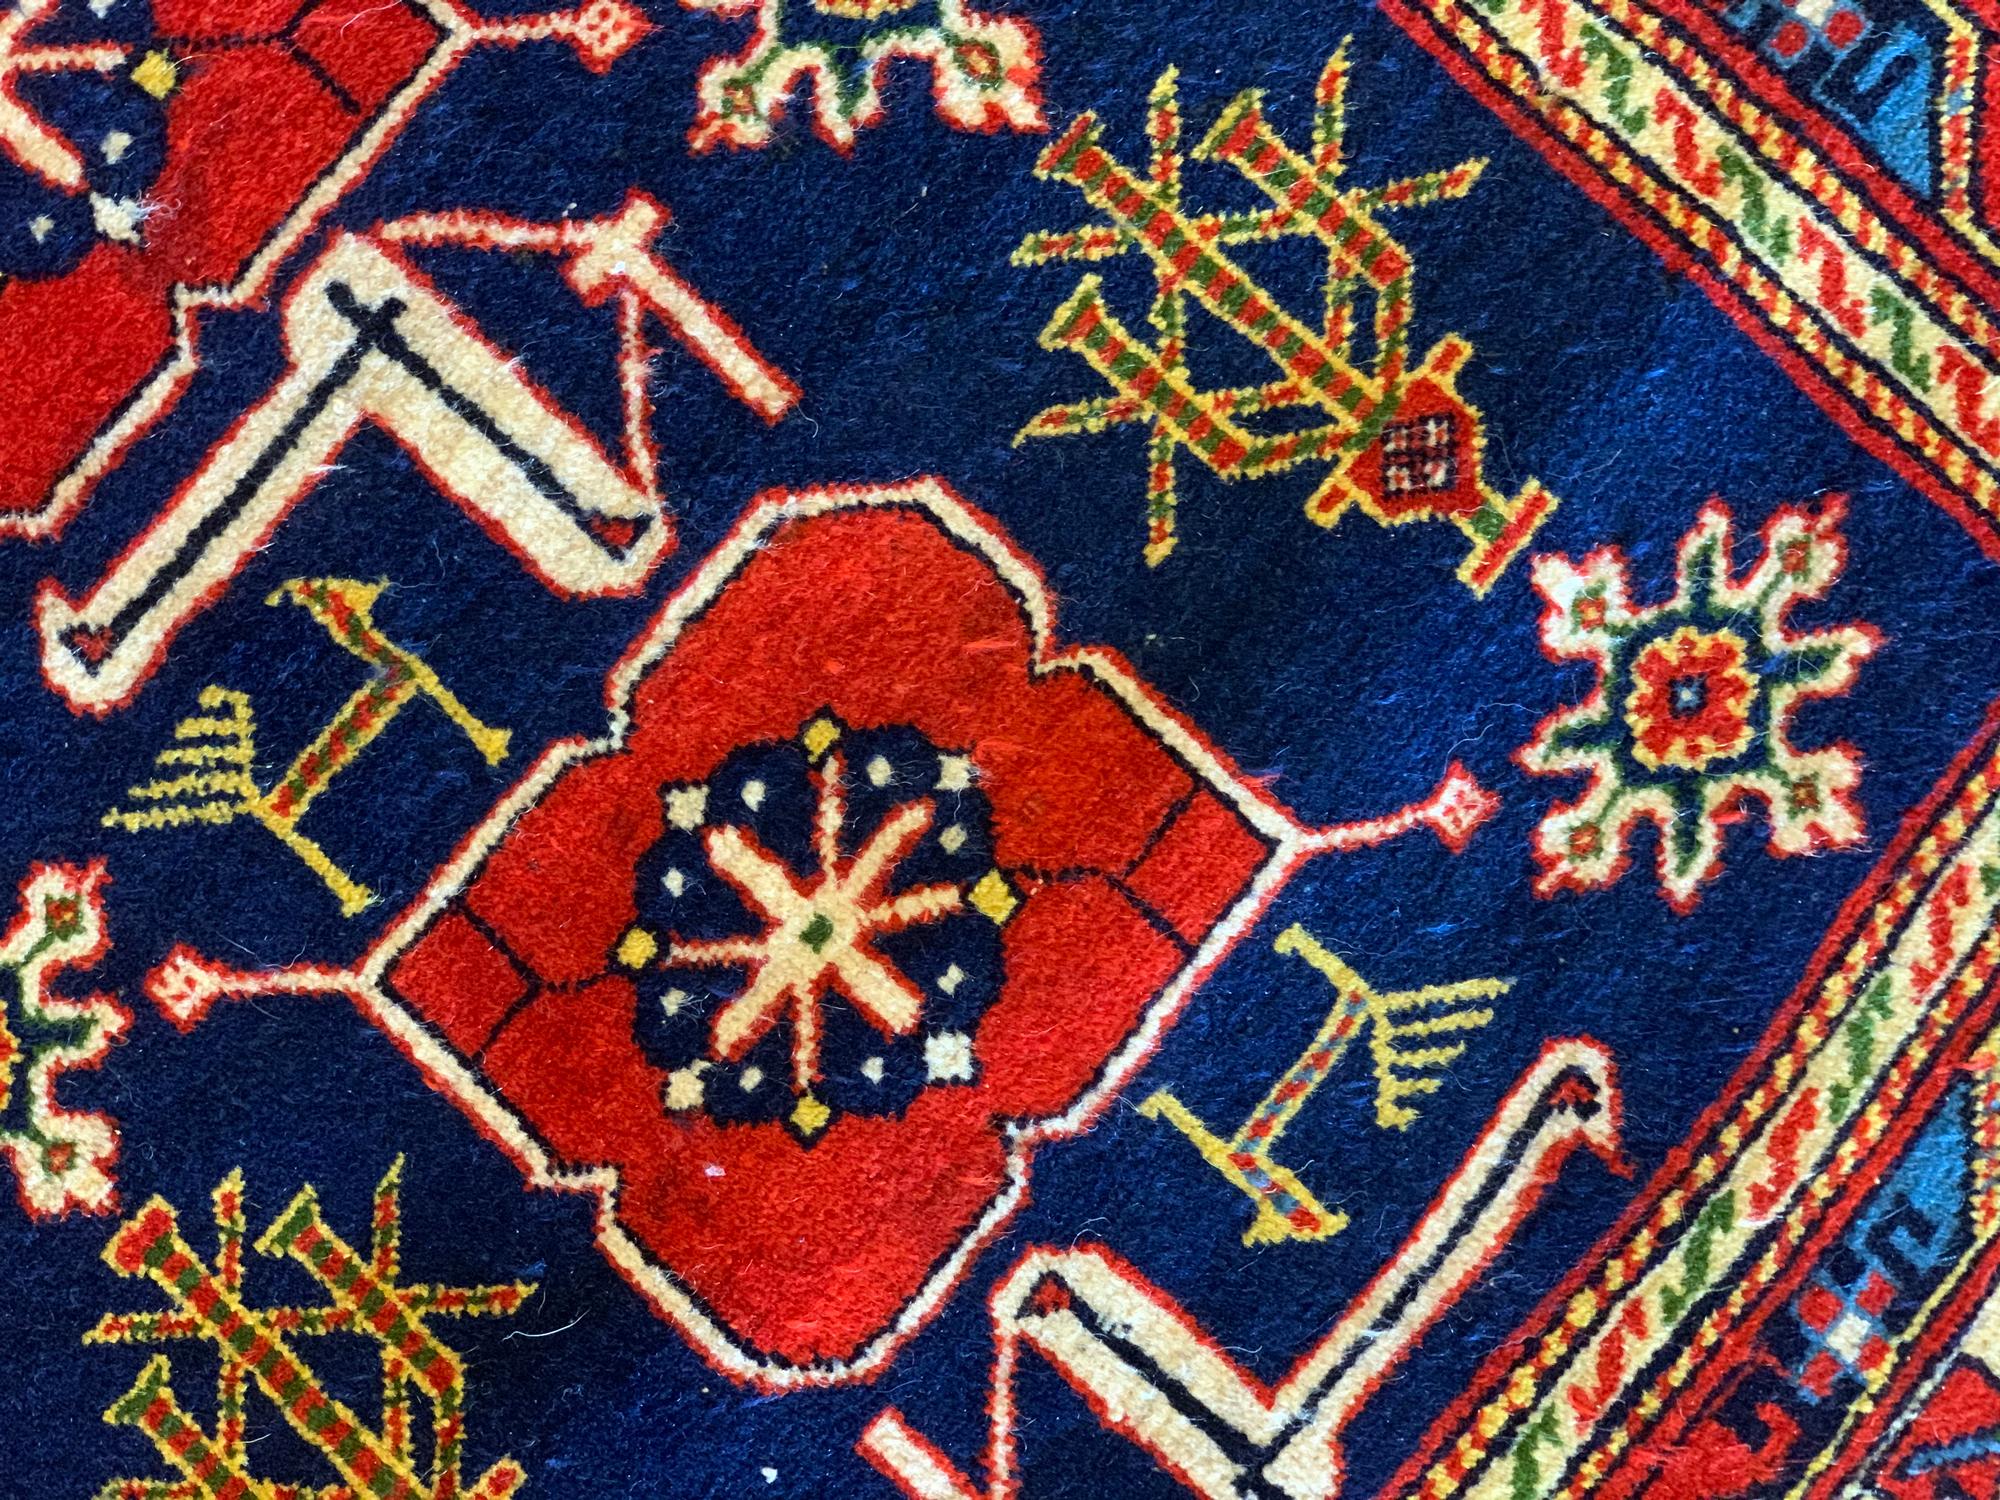 Late 19th Century Collectible KaraKashli Rug Antique Shirvan Rug Handwoven Wool Carpet For Sale